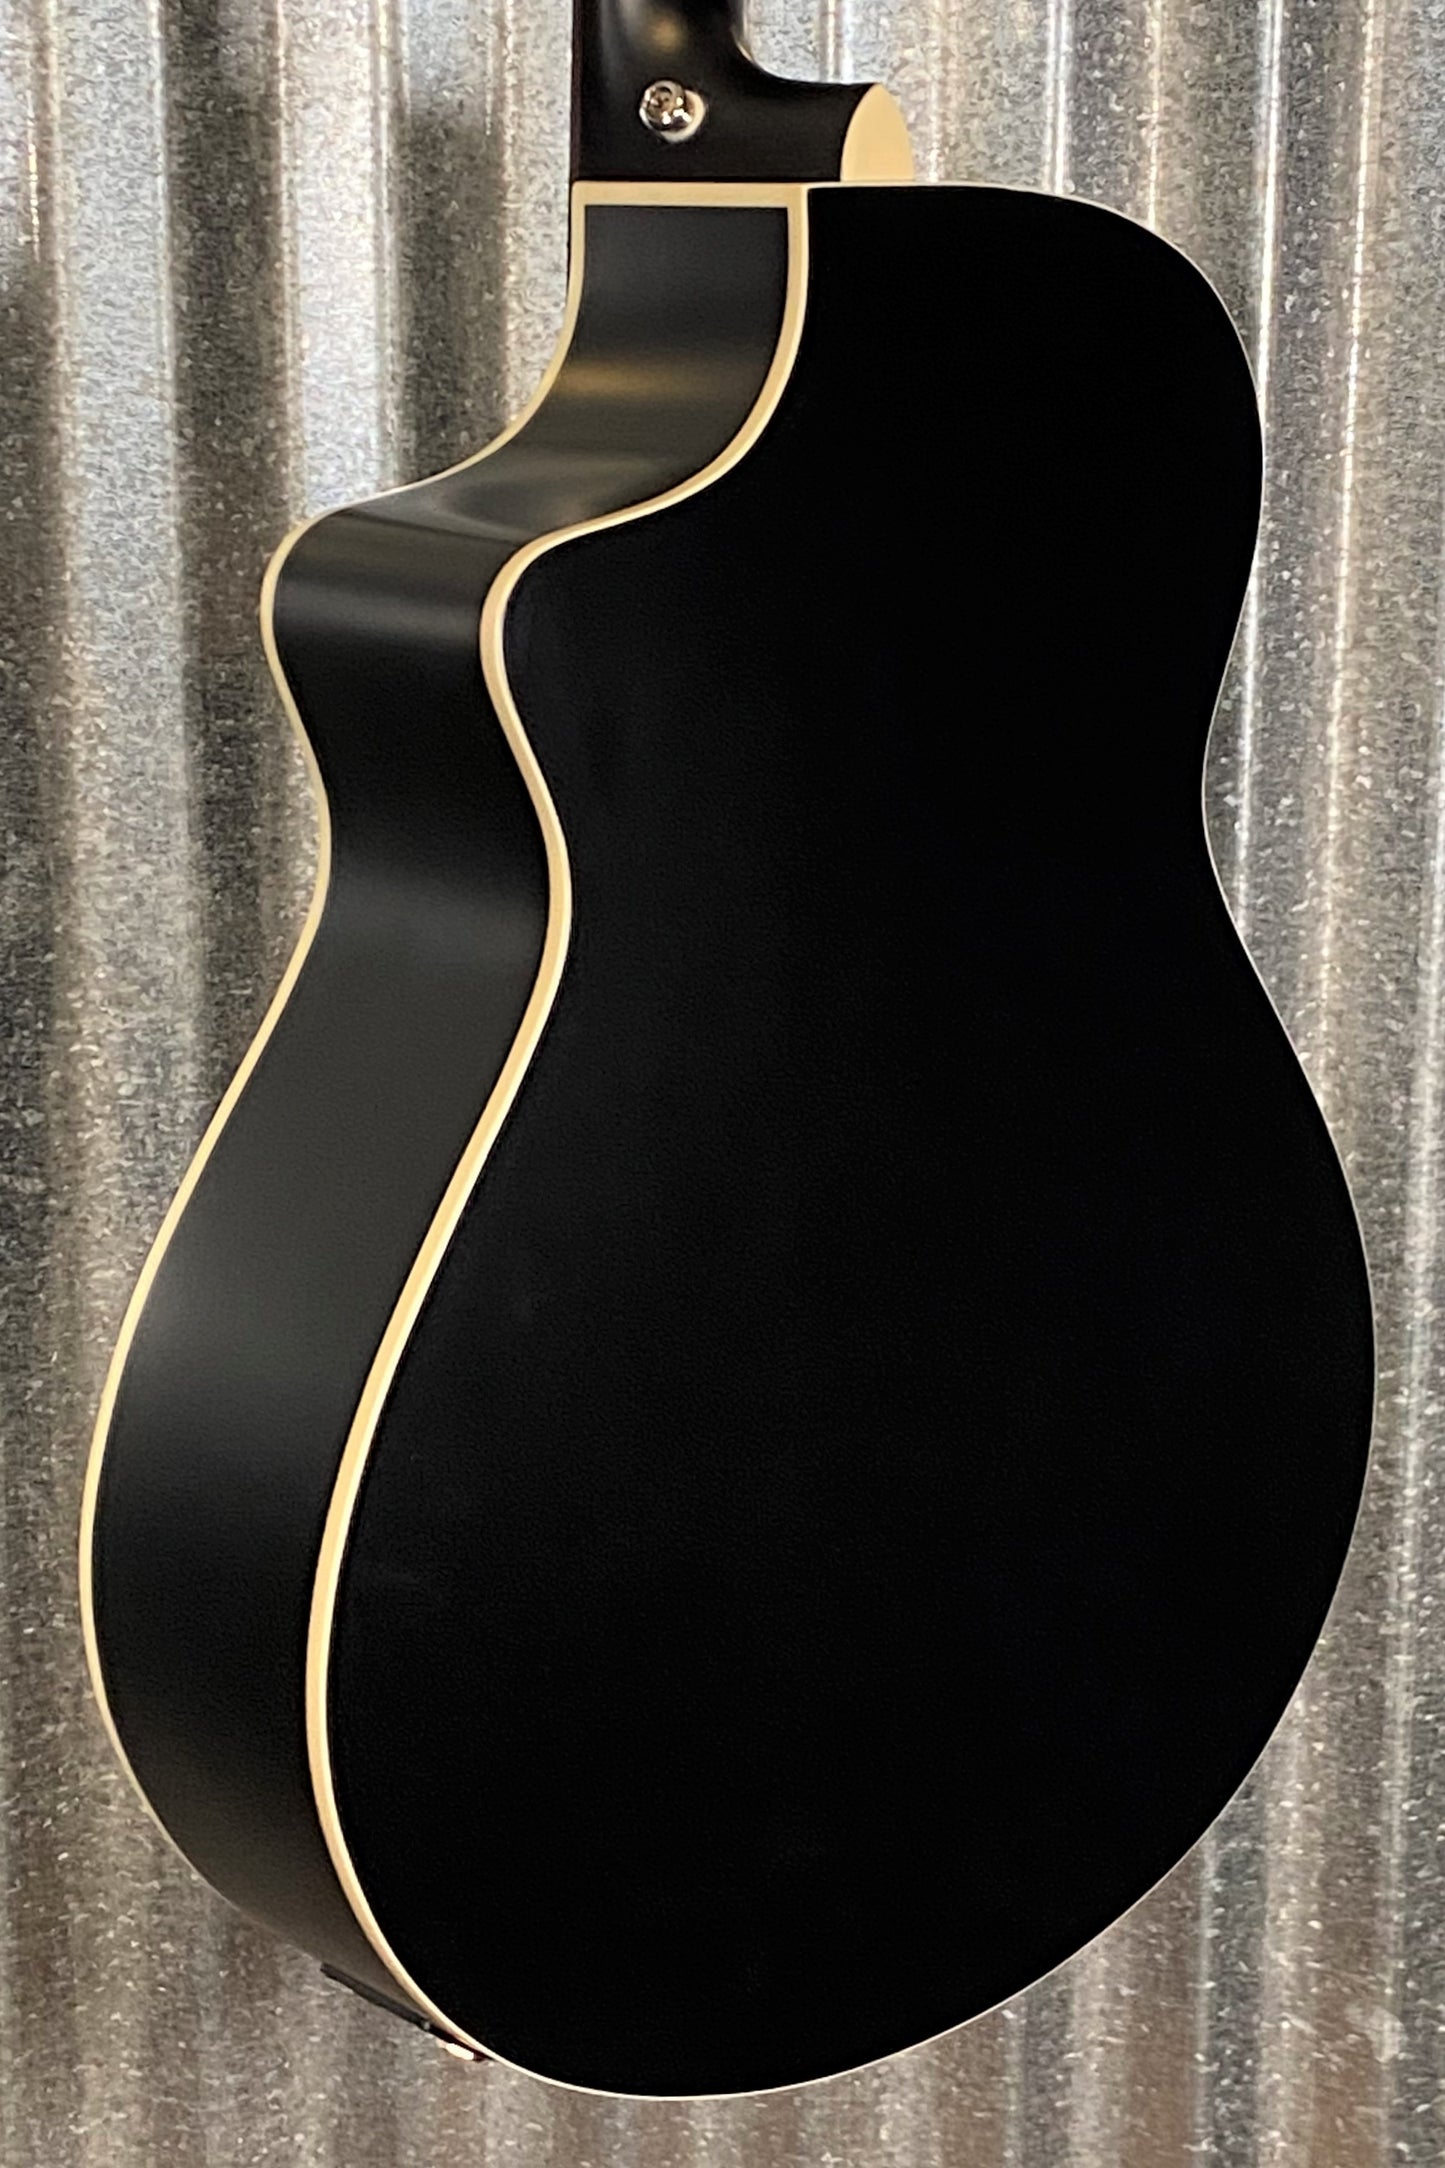 Breedlove Discovery Concert CE Satin Black Acoustic Electric Guitar Blem #3698